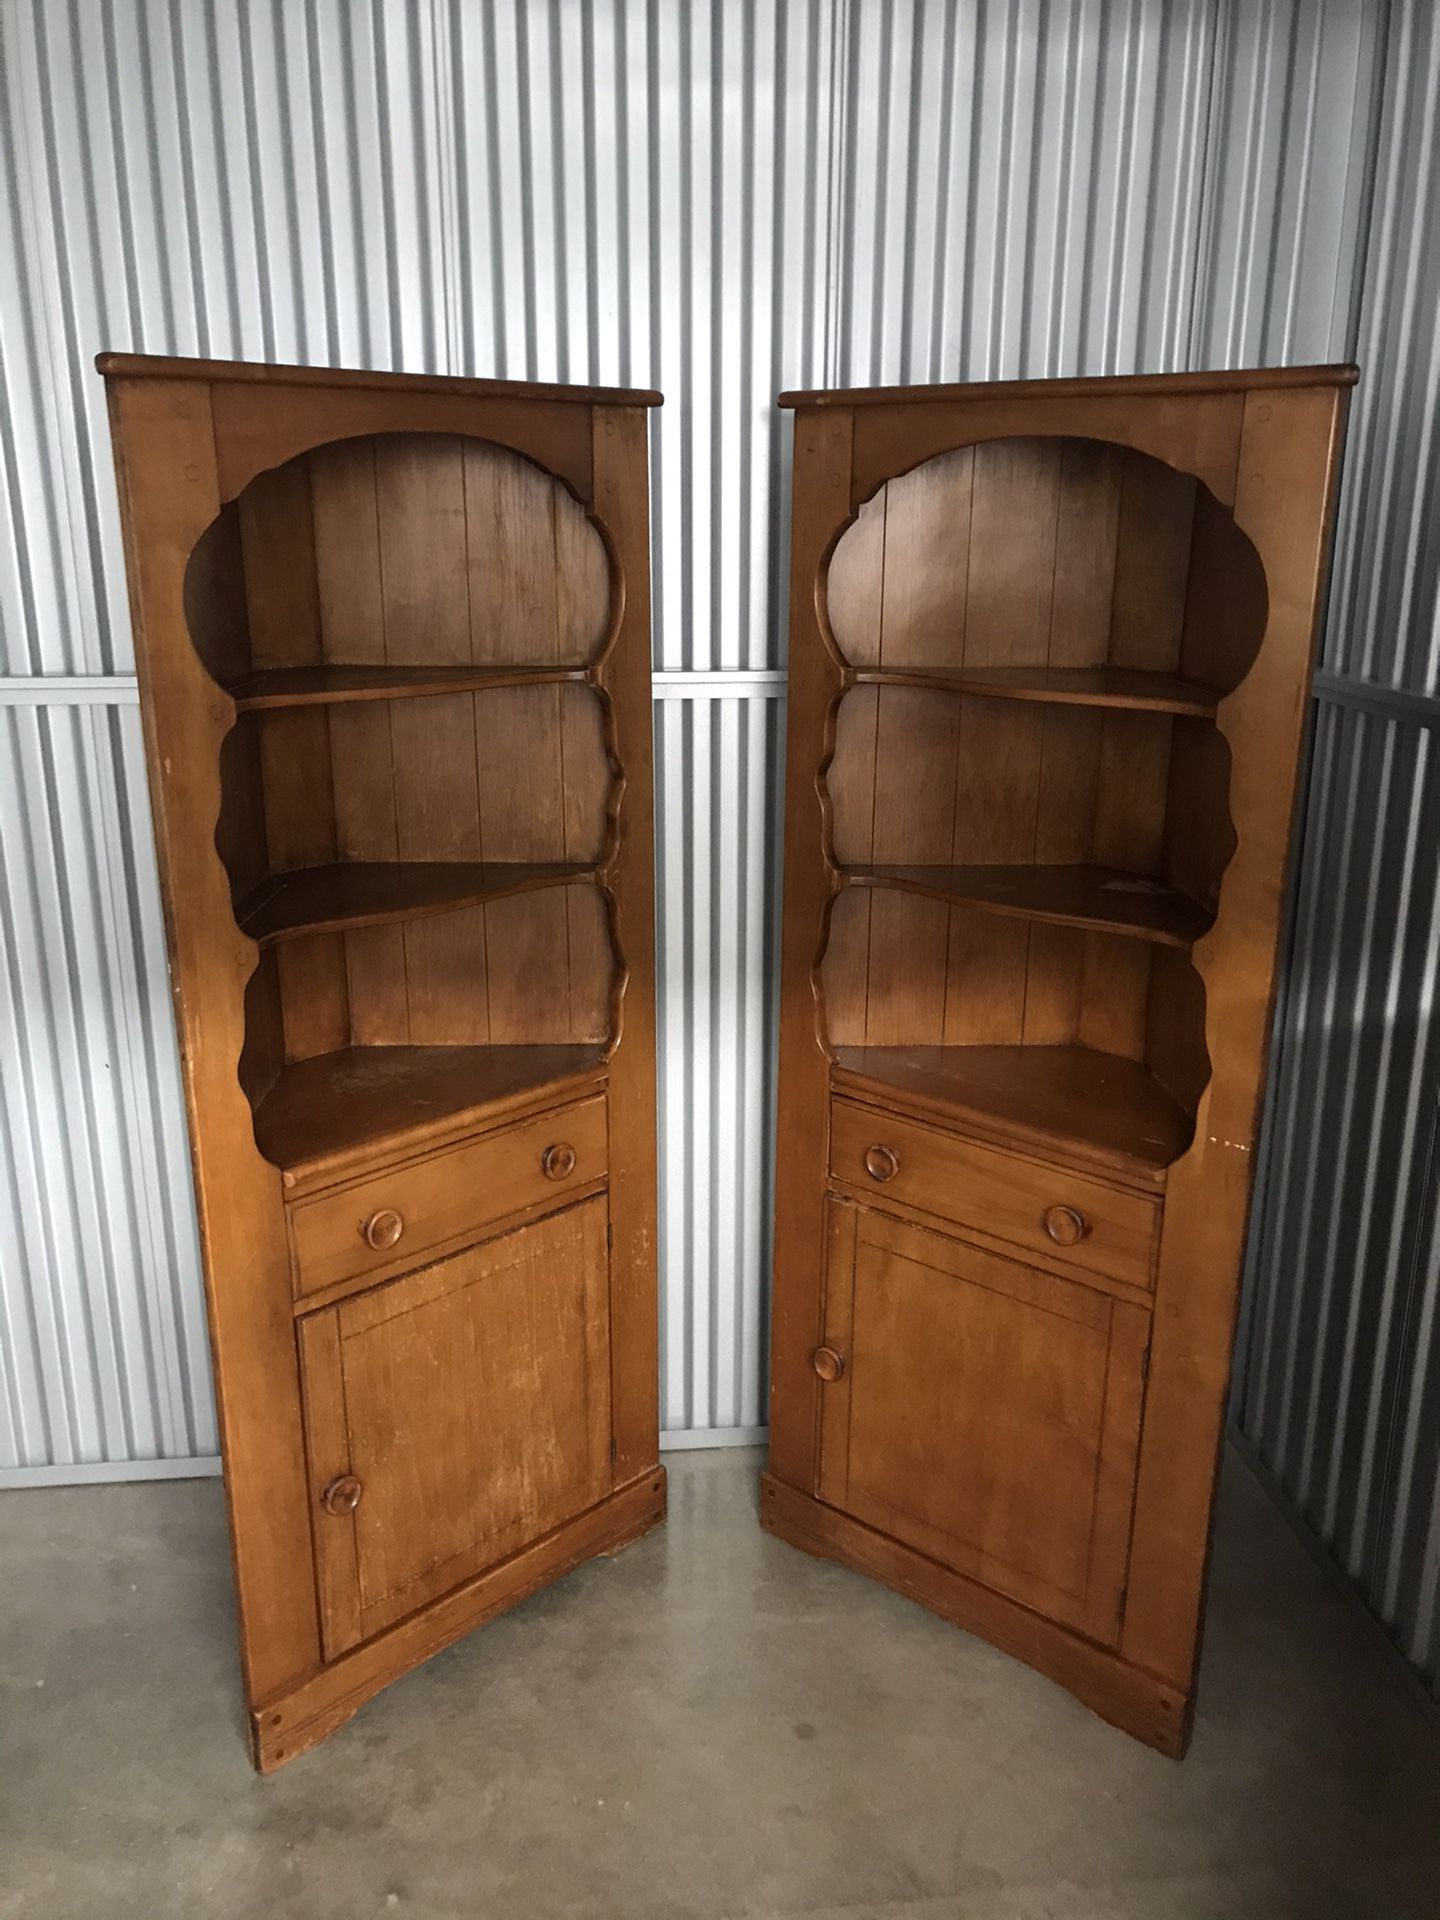 Antique corner cabinets